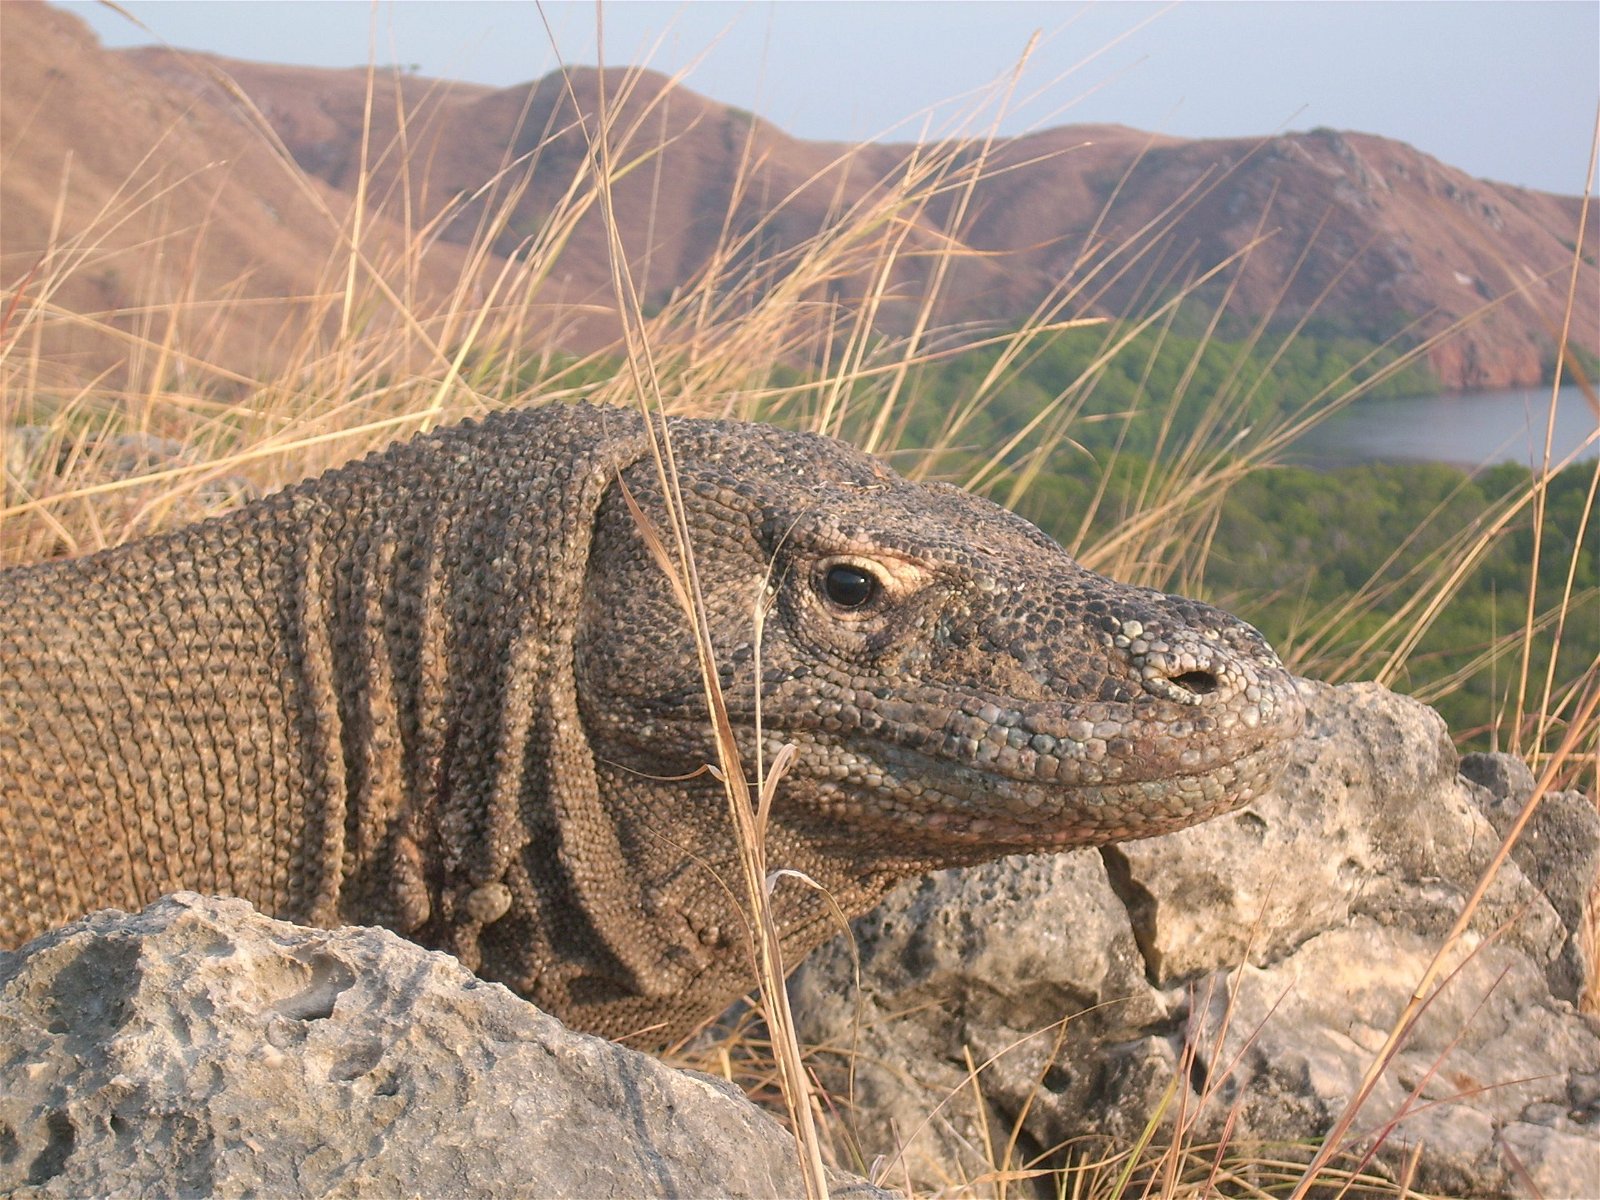 A close-up shot of a Komodo dragon on the island of Rinca